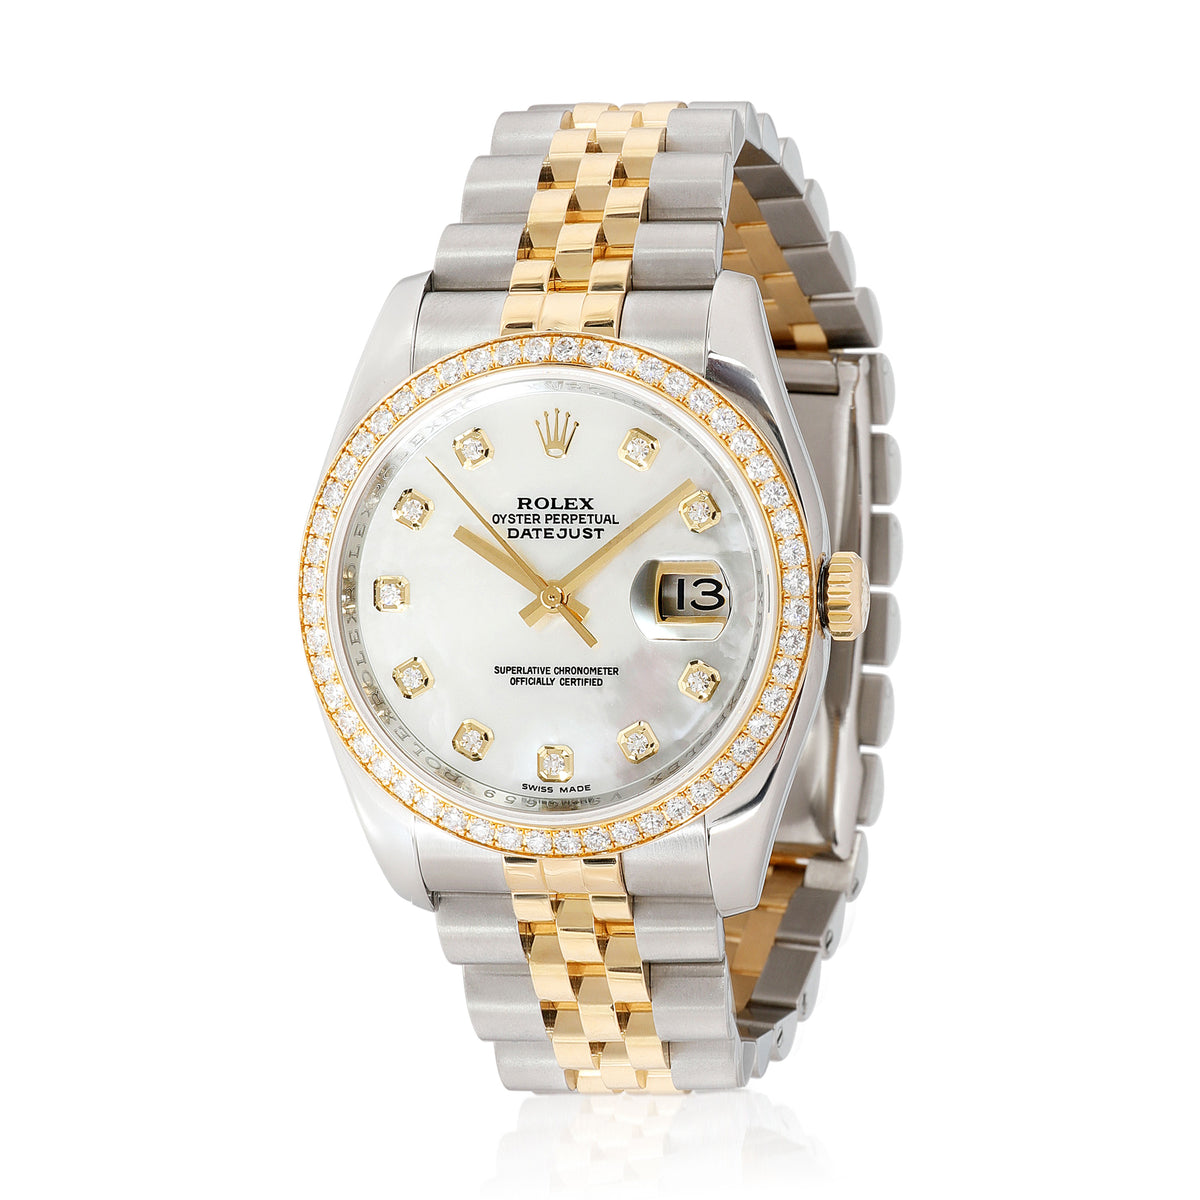 Rolex Datejust 116243 Men's Watch in 18kt Stainless Steel/Yellow Gold